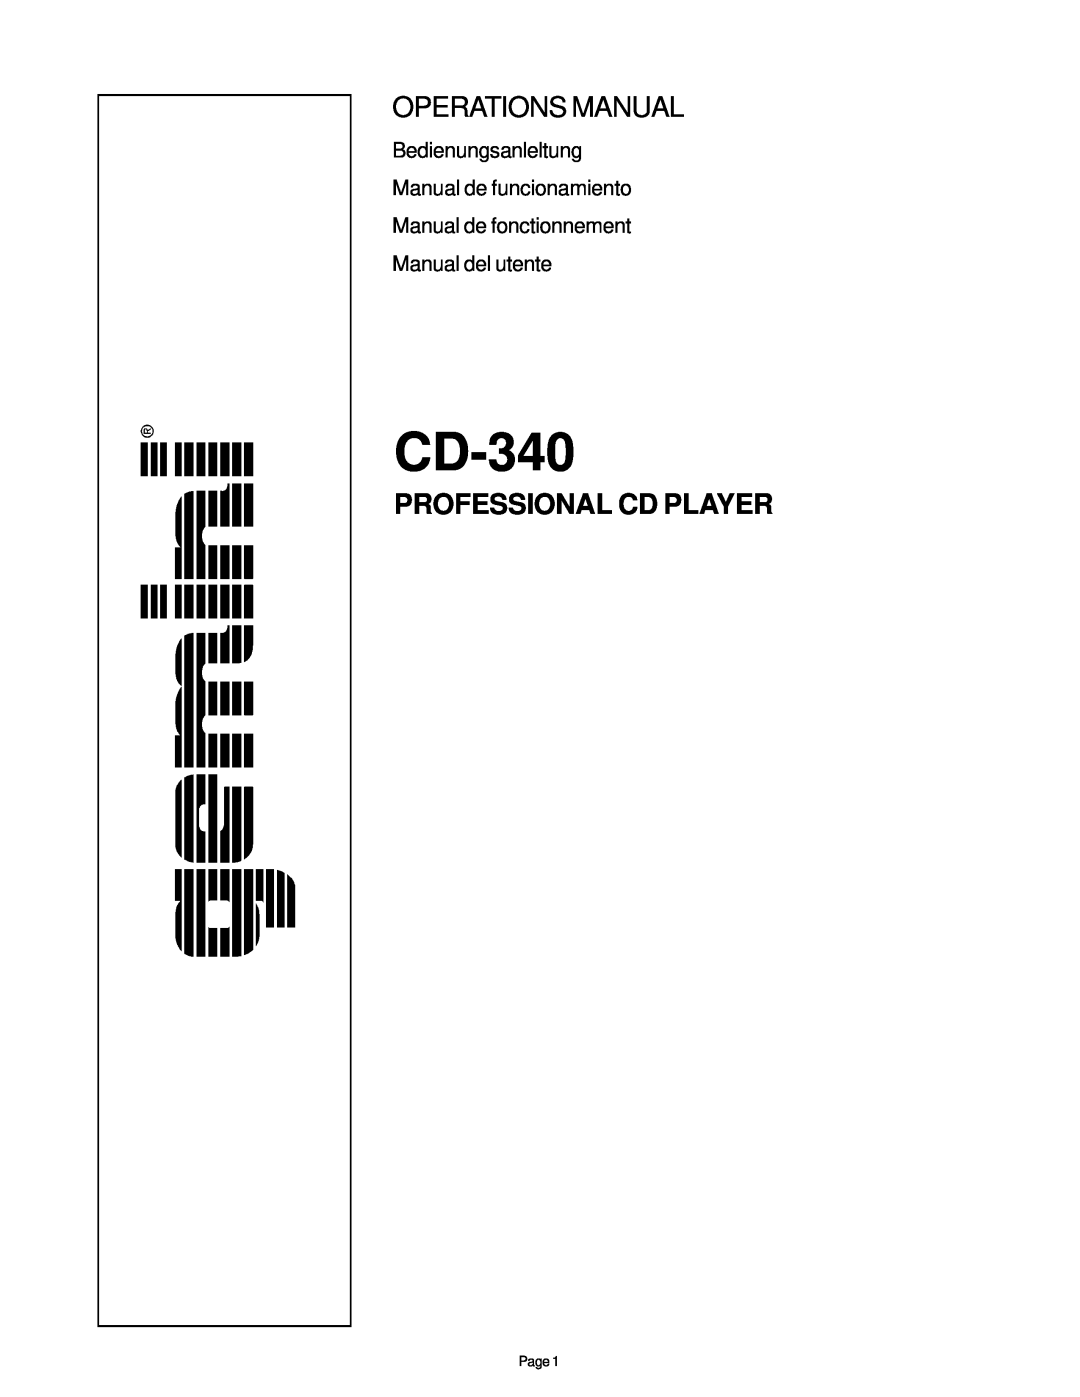 Gemini CD-340 manual Operations Manual, Professional Cd Player, Bedienungsanleltung Manual de funcionamiento 